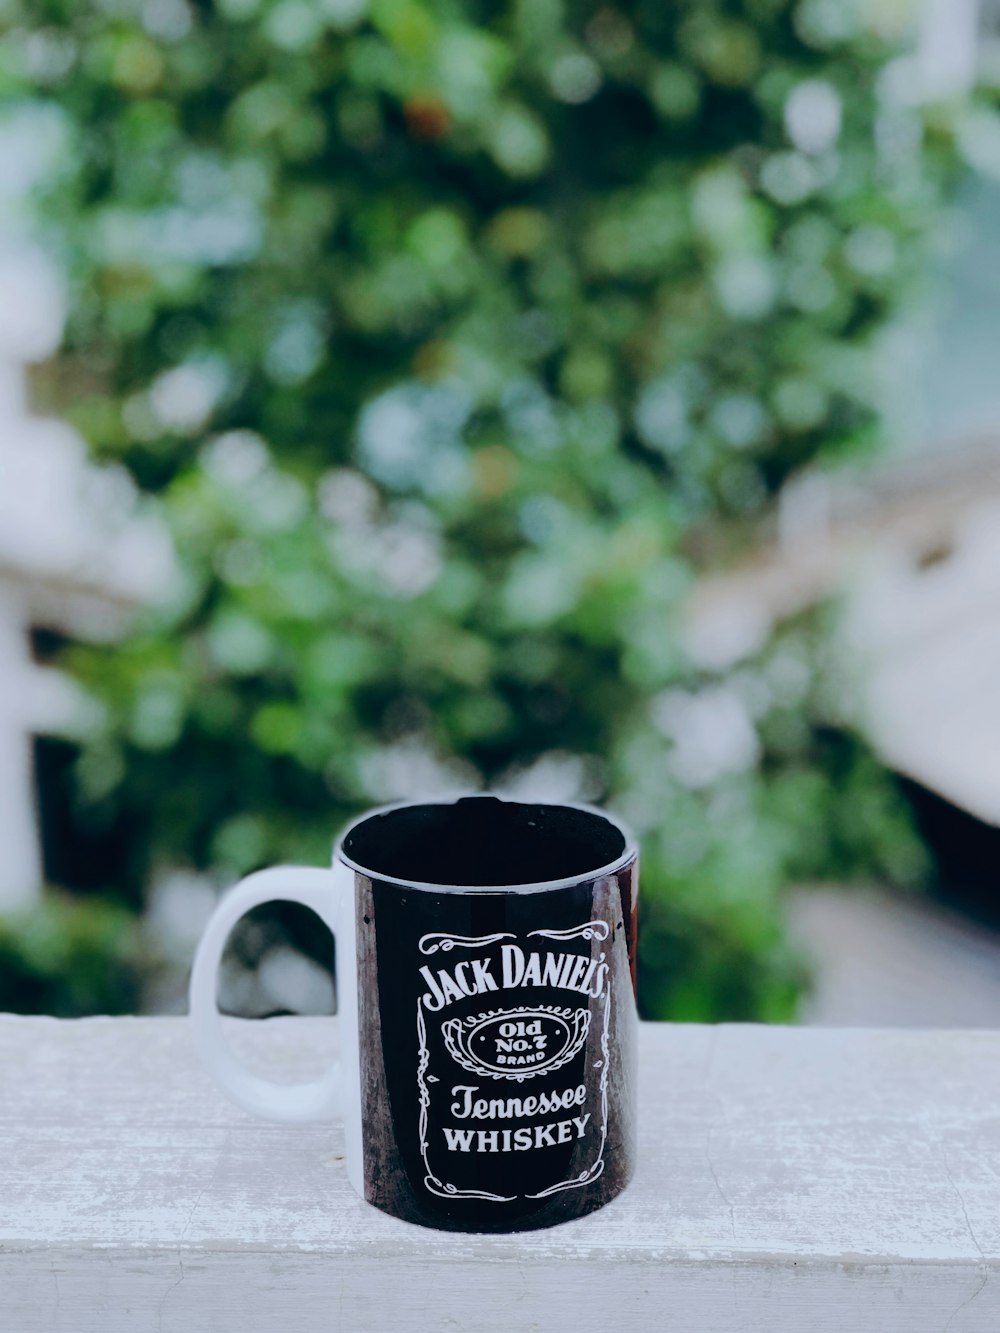 Jack Daniel's ceramic mug on pavement